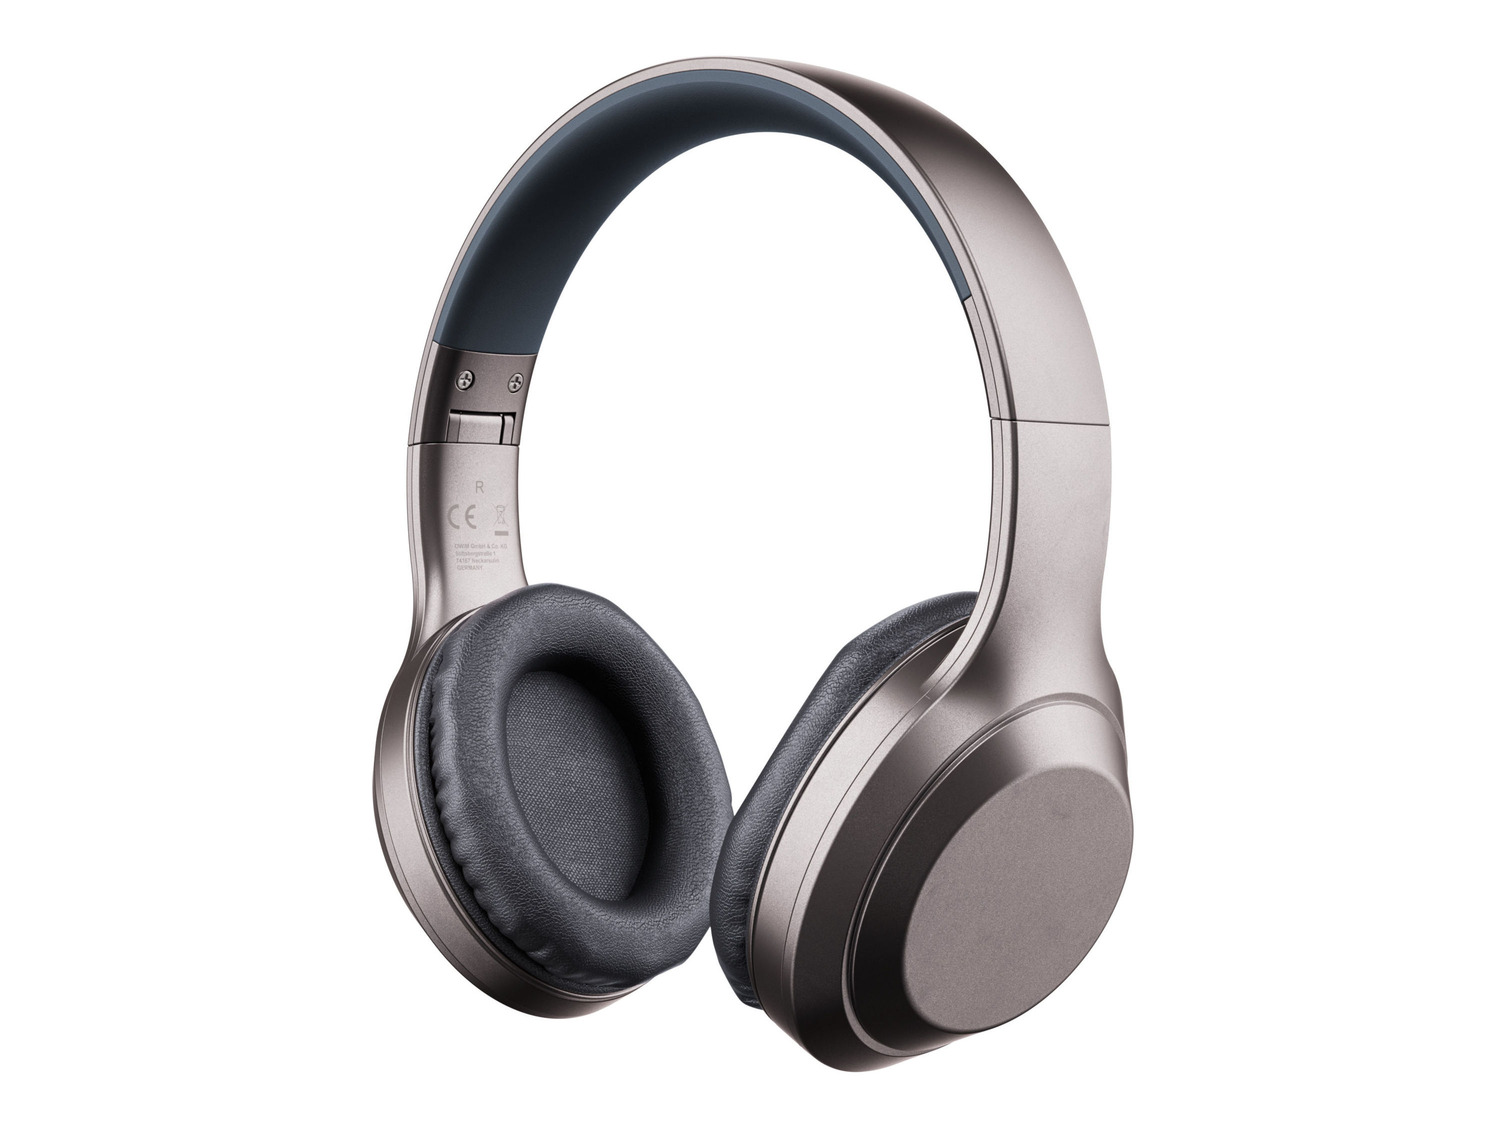 Kaufen SILVERCREST® On Ear Kopfhörer Bluetooth ZR7068 Black Friday Deals |  Mesjeuxipad